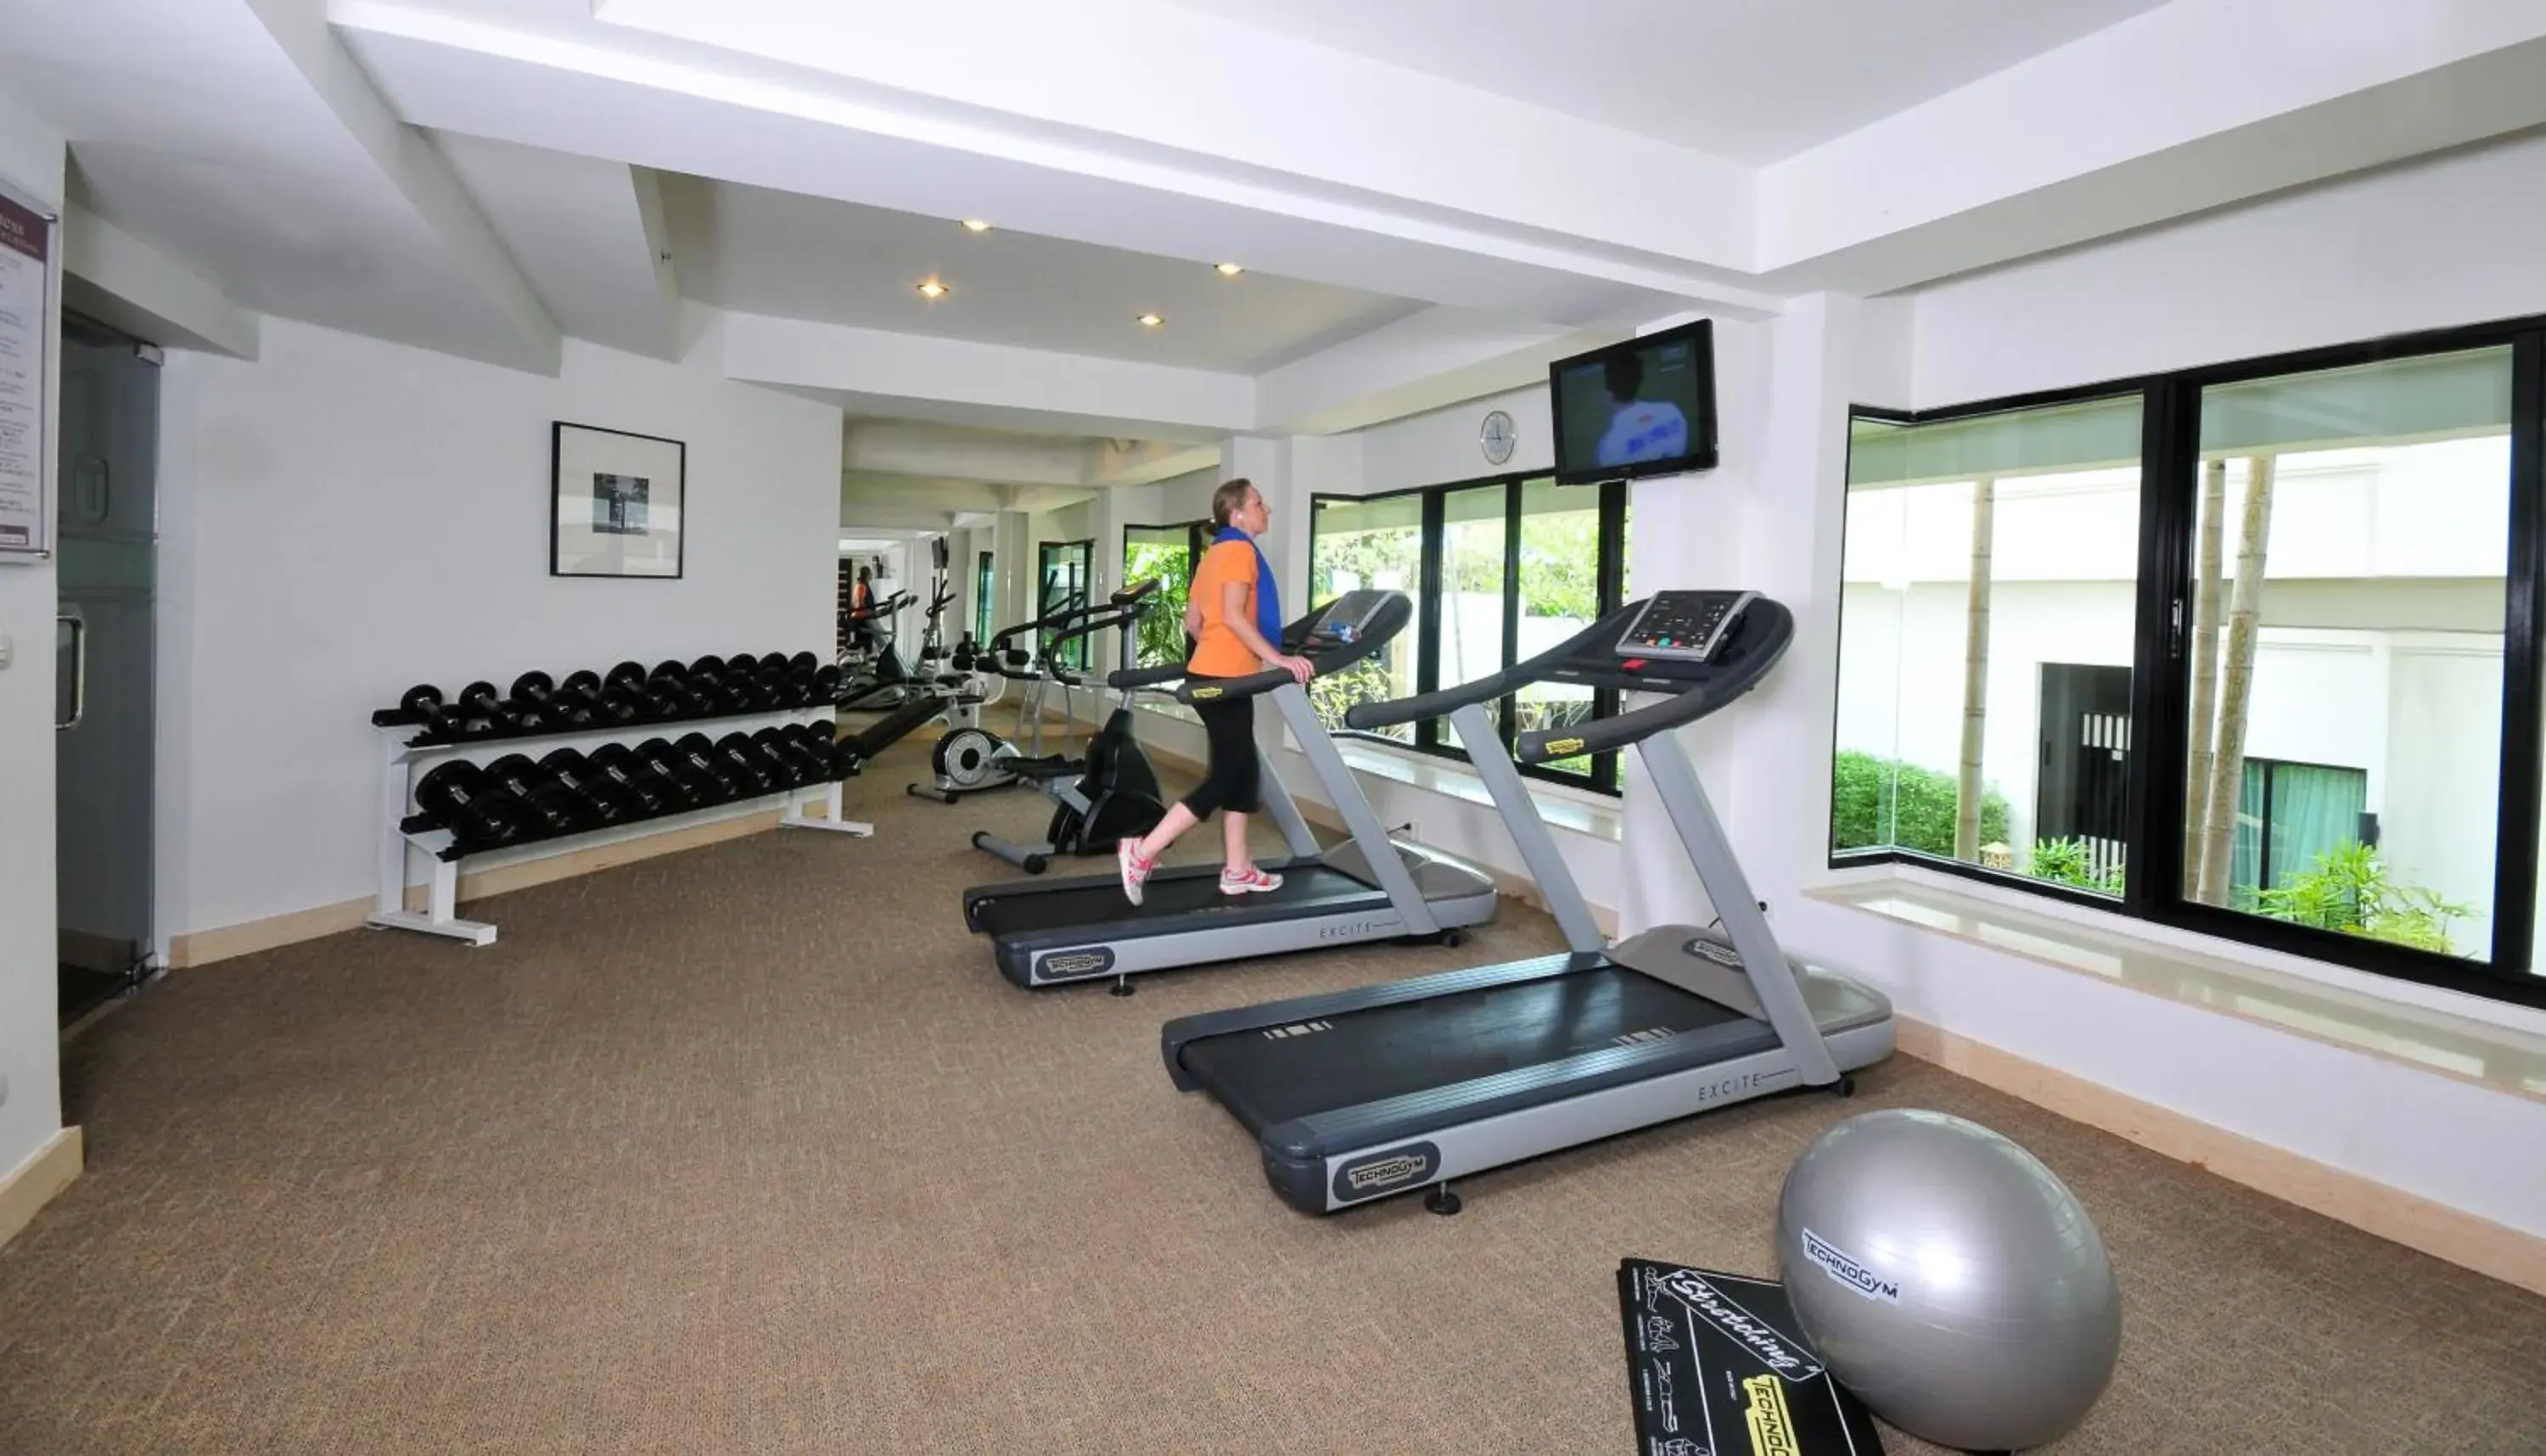 Fitness centre/facilities, Fitness Center/Facilities in Tara Angkor Hotel